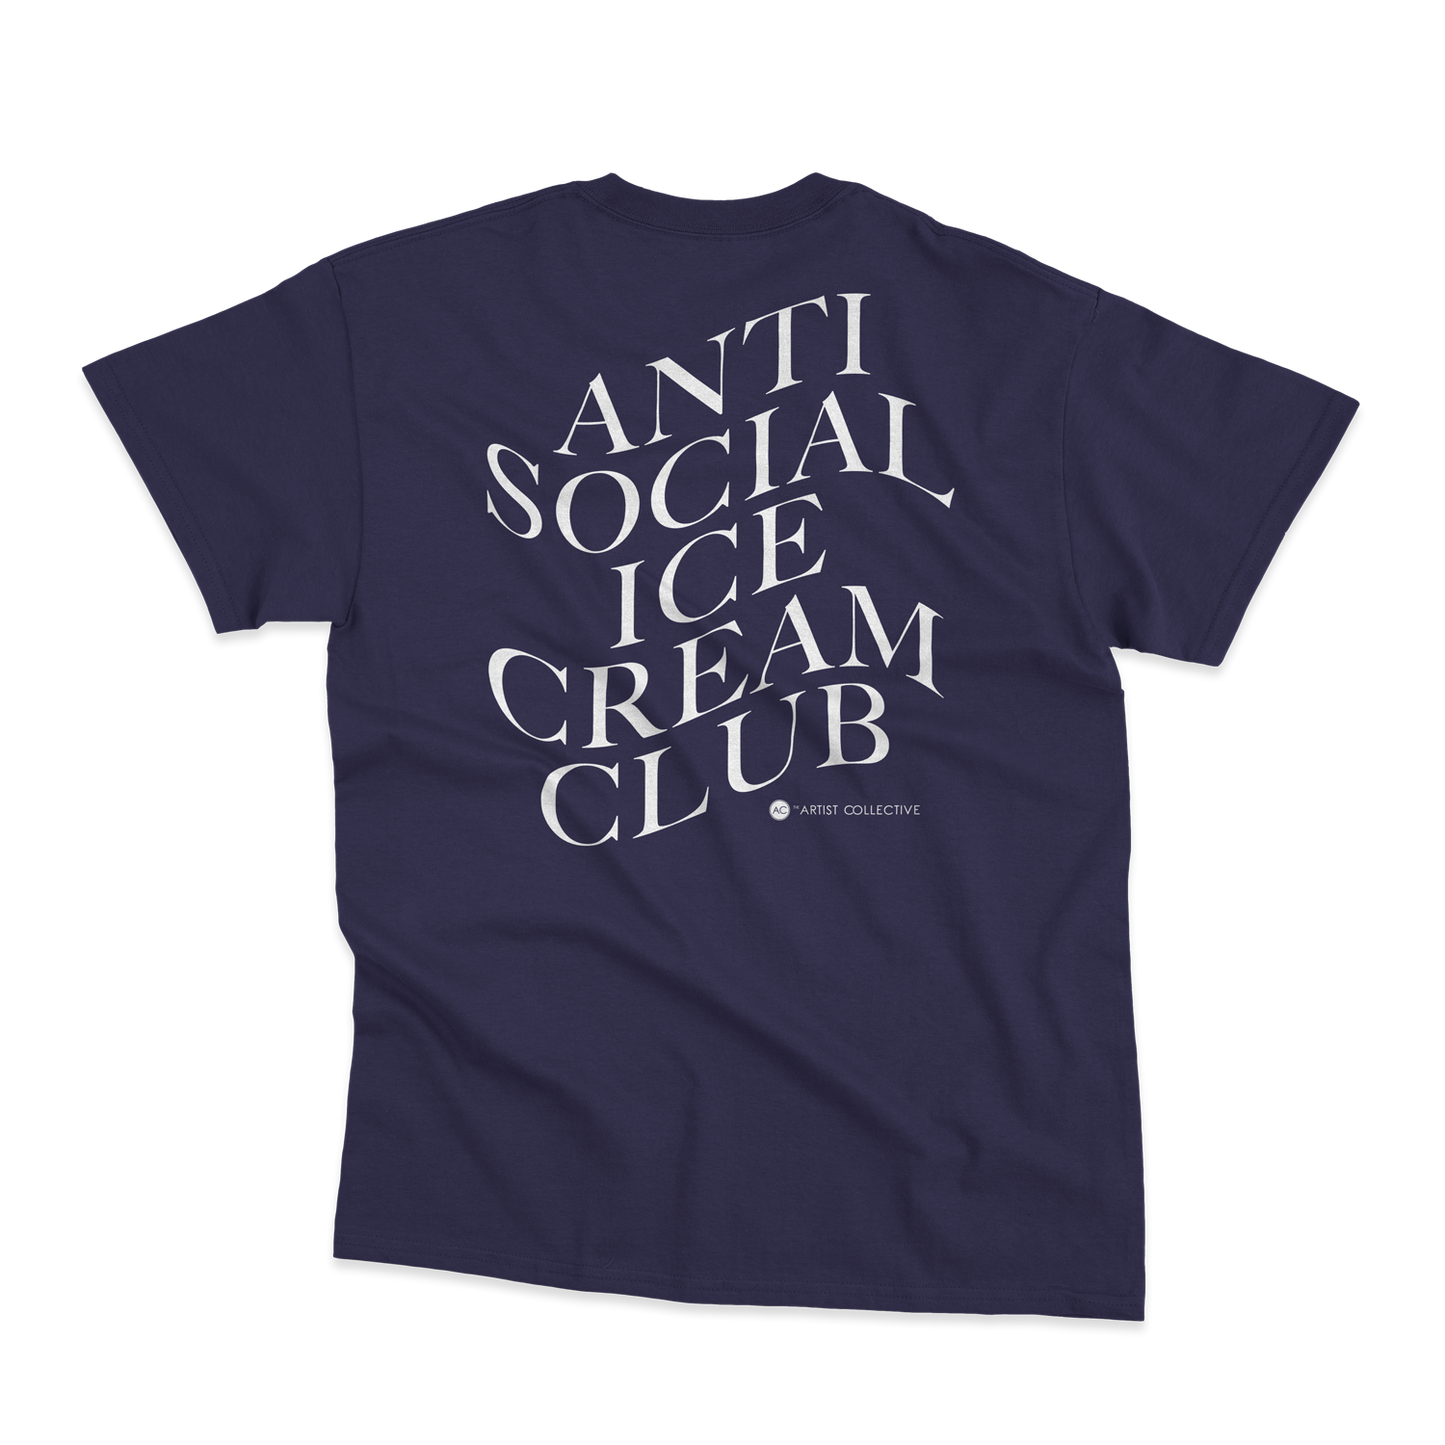 Anti-Social Ice Cream Club Tee Shirt